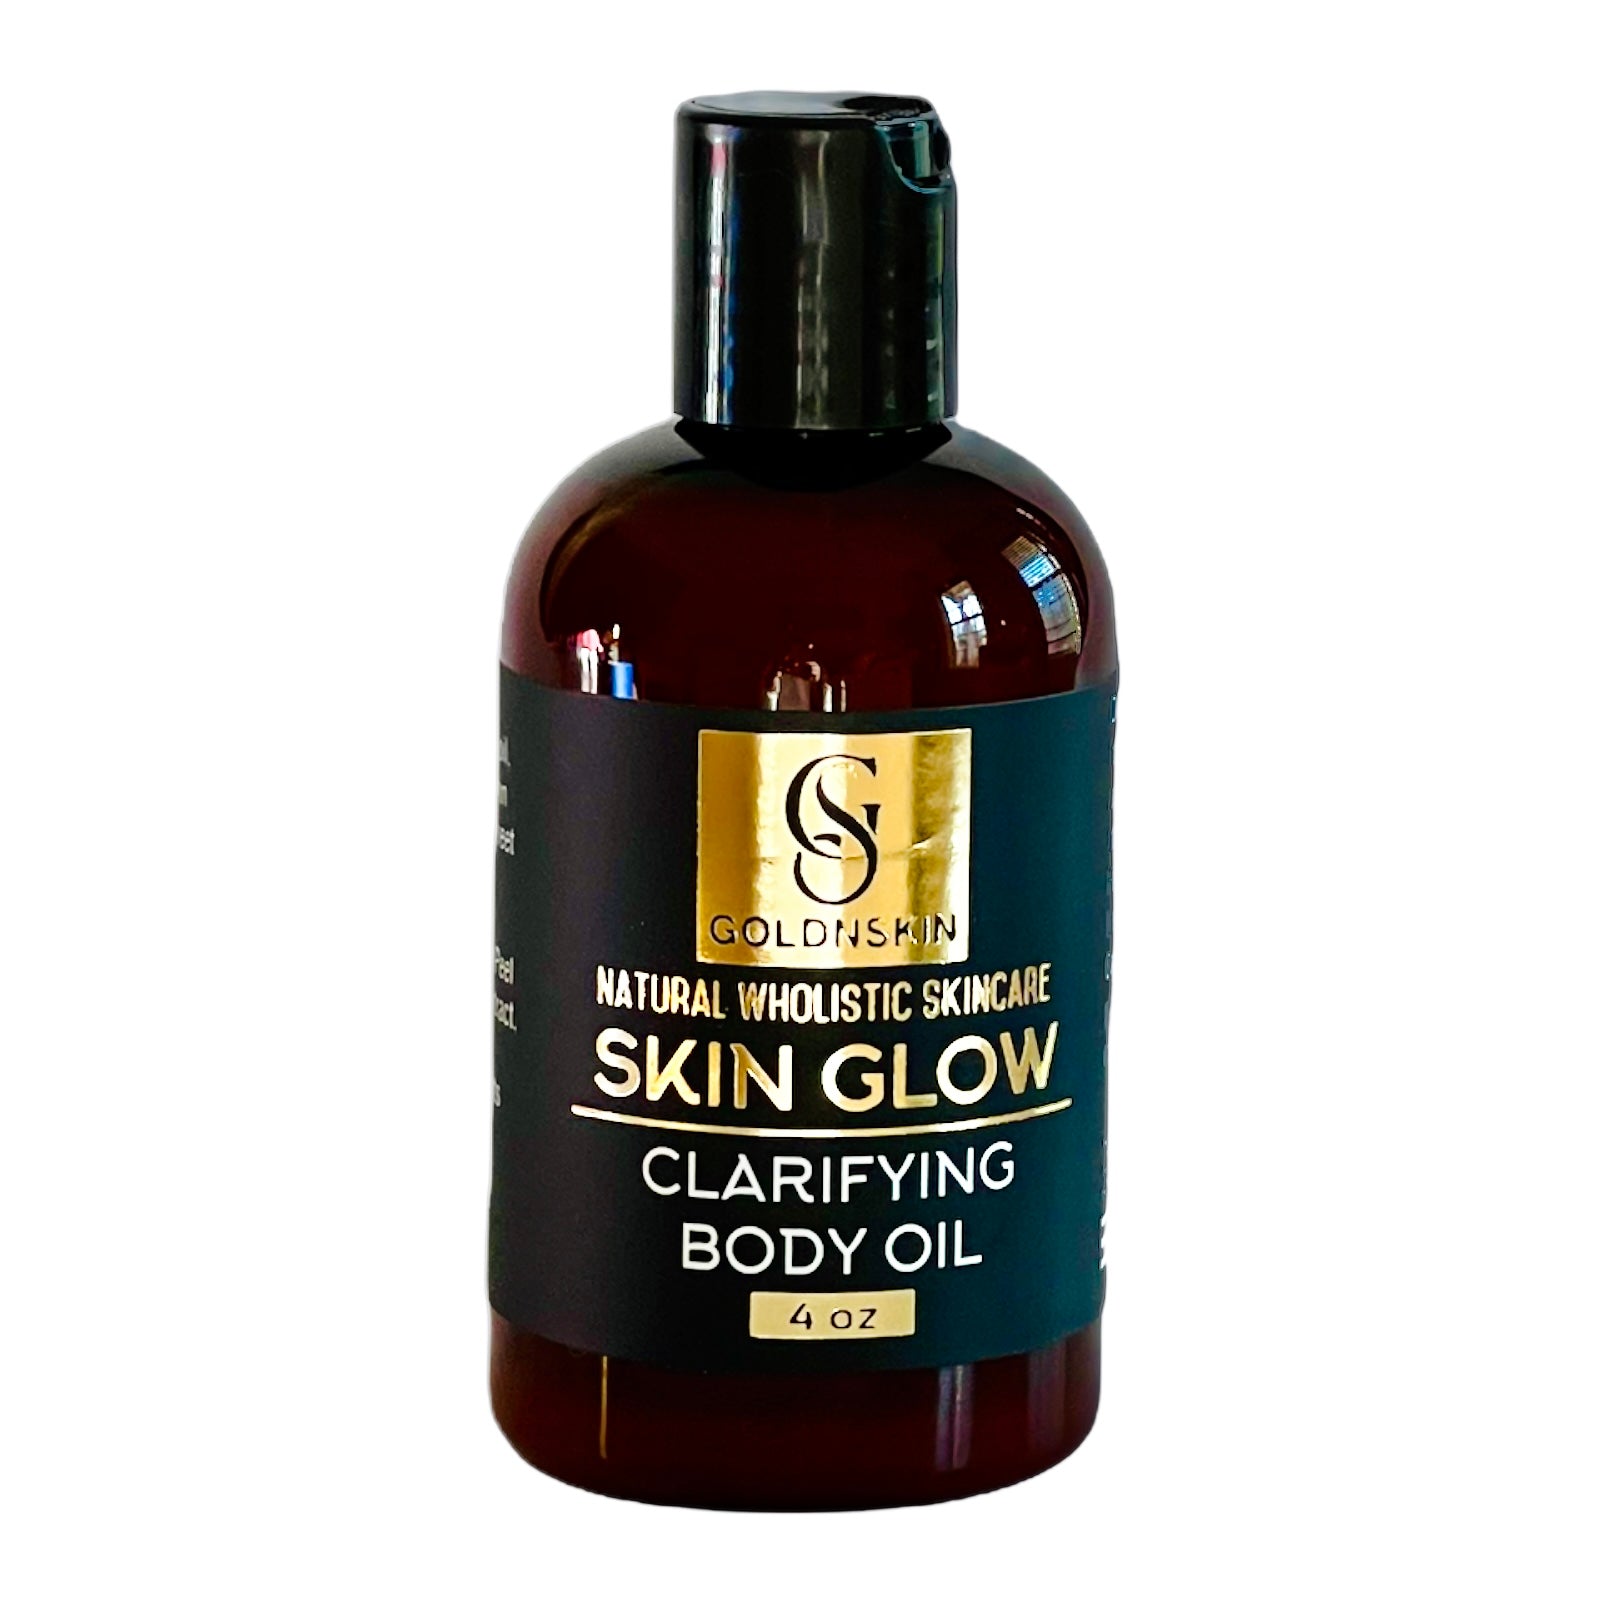 Goldnskin skin glow clarifying vitamin e oil 